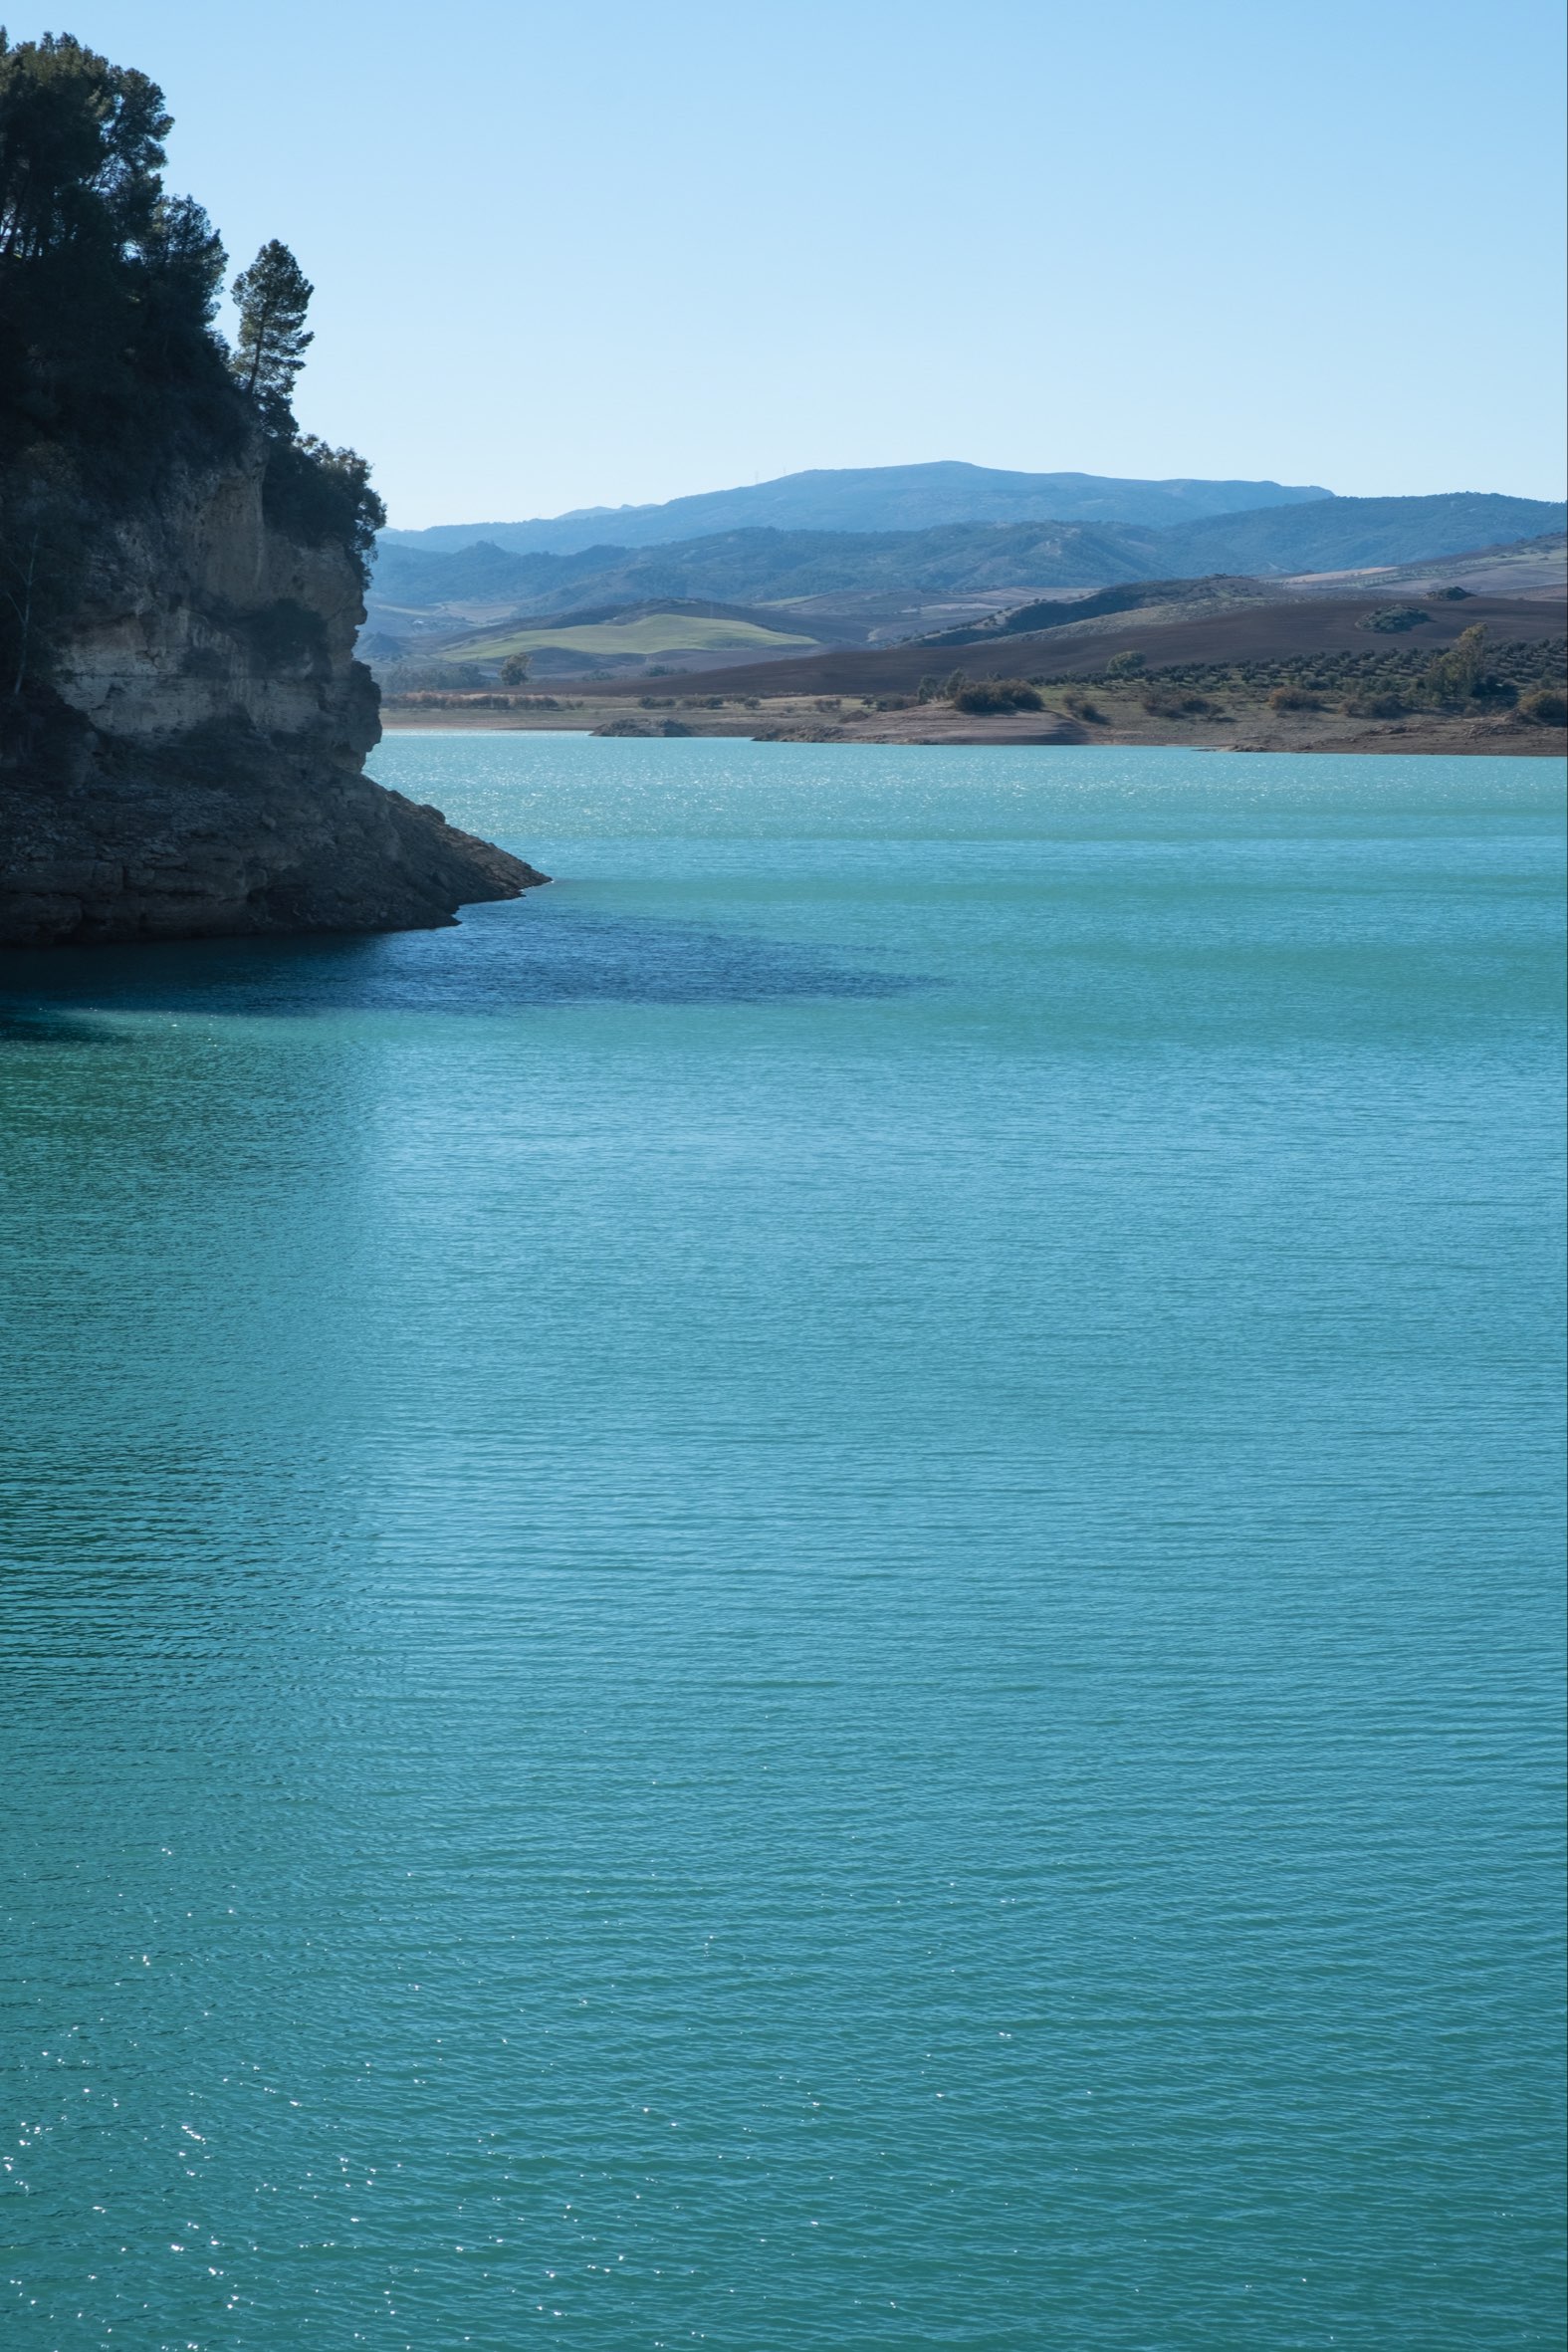 Guadalhorce reservoir